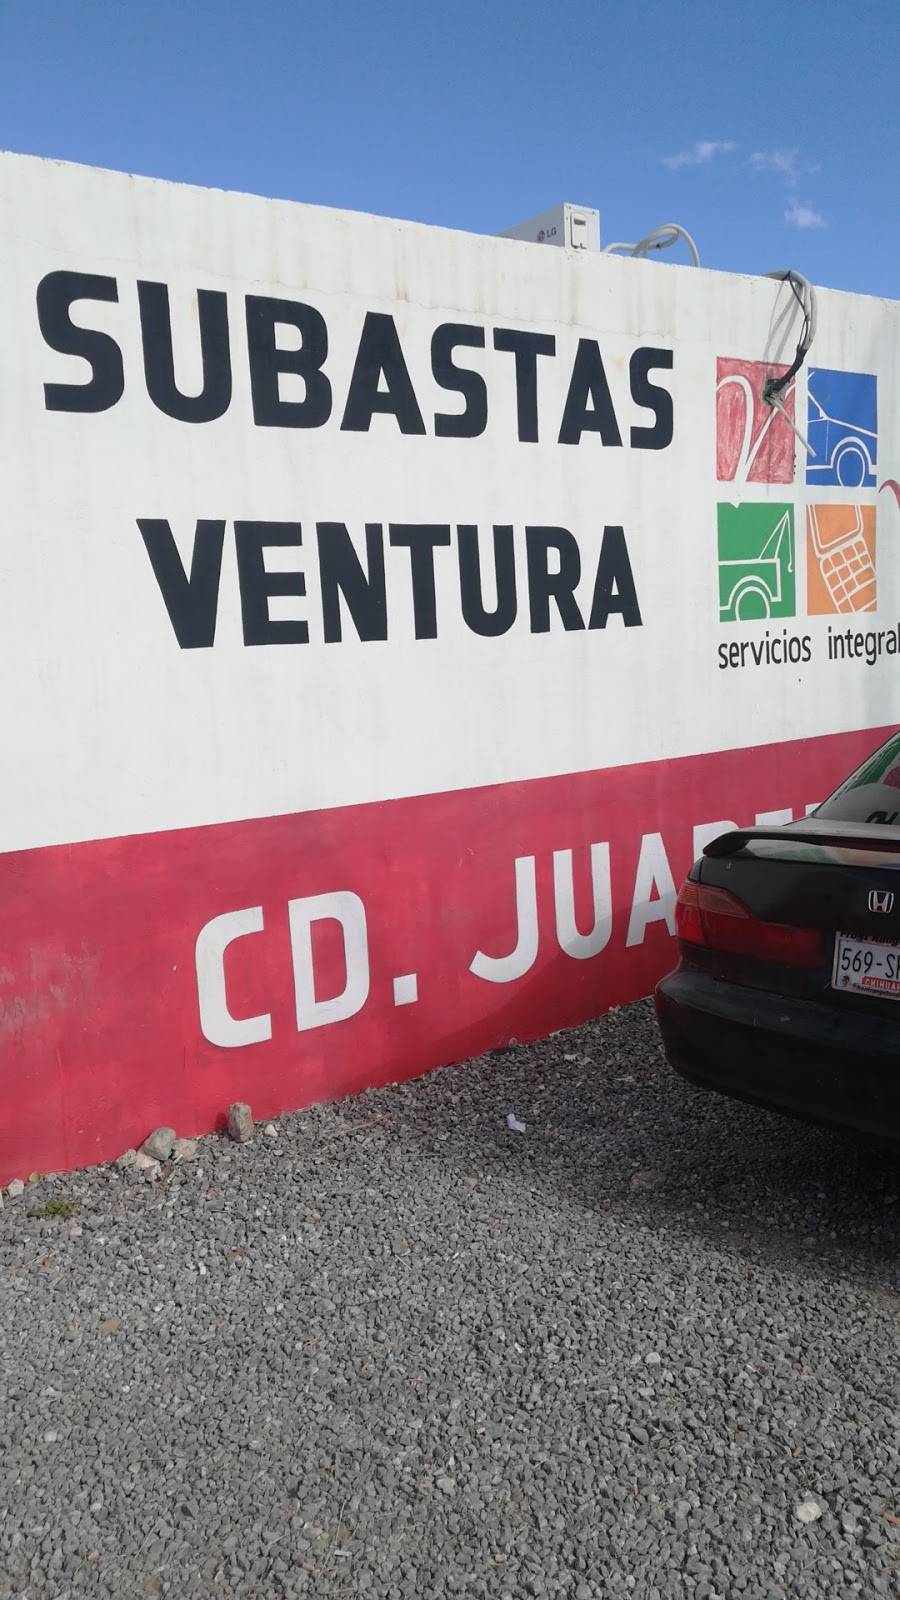 Subastas Ventura | Eje Vial Juan Gabriel #2740, Eje Juan Gabriel, 32628 Cd Juárez, Chih., Mexico | Phone: 656 613 7273